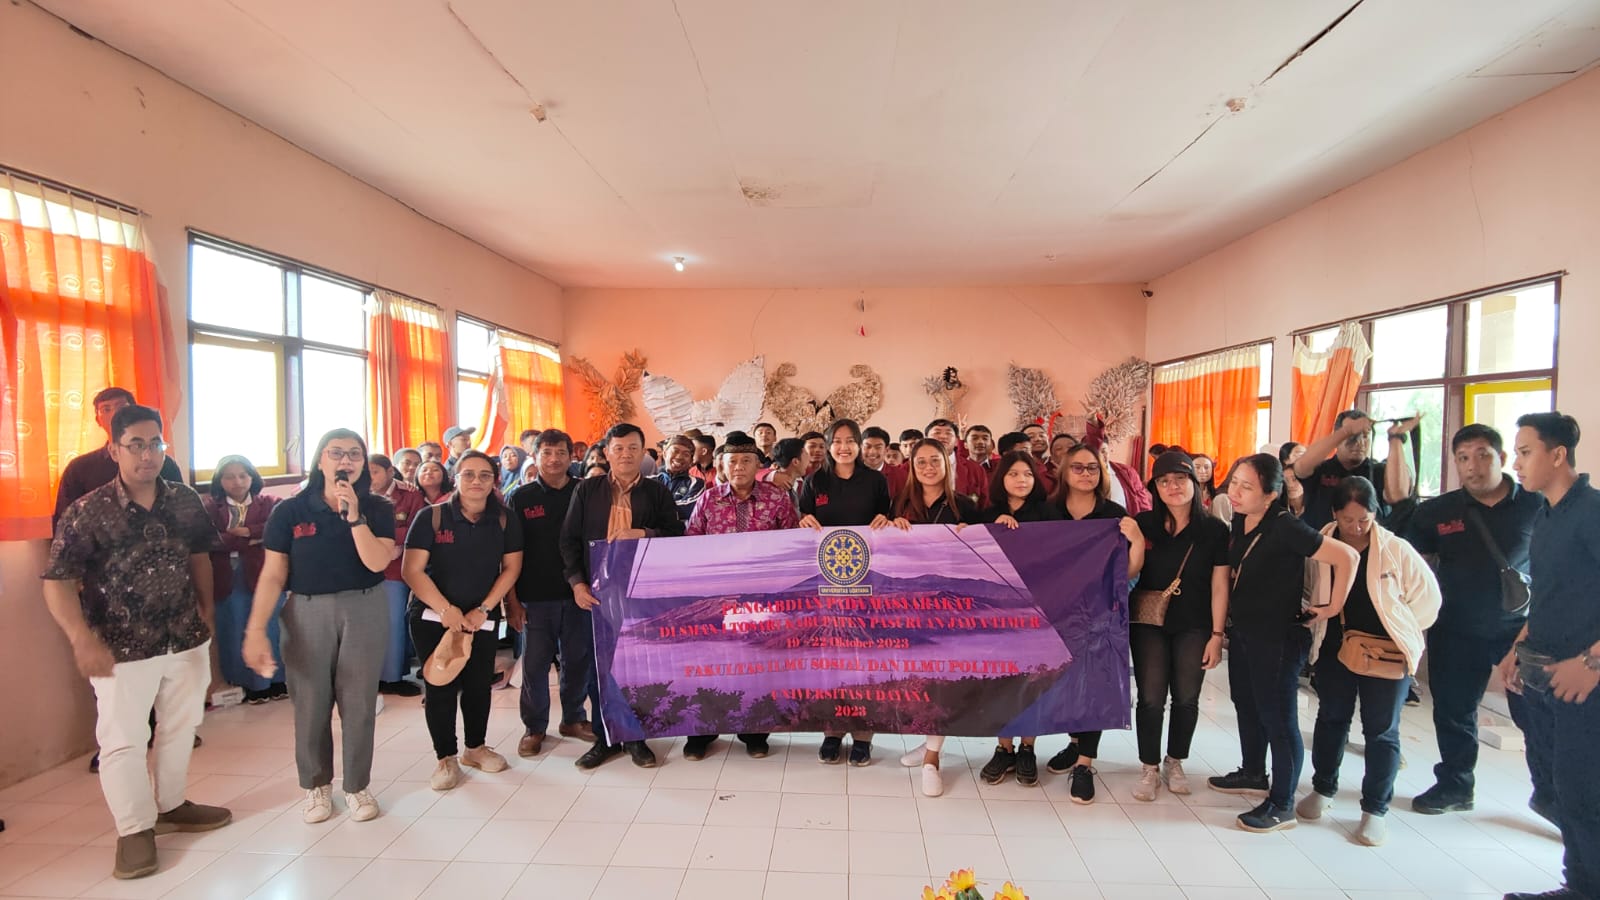 The FISIP Udayana academic community carries out Community Service activities in Tosari Village, Pasuruan, East Java.